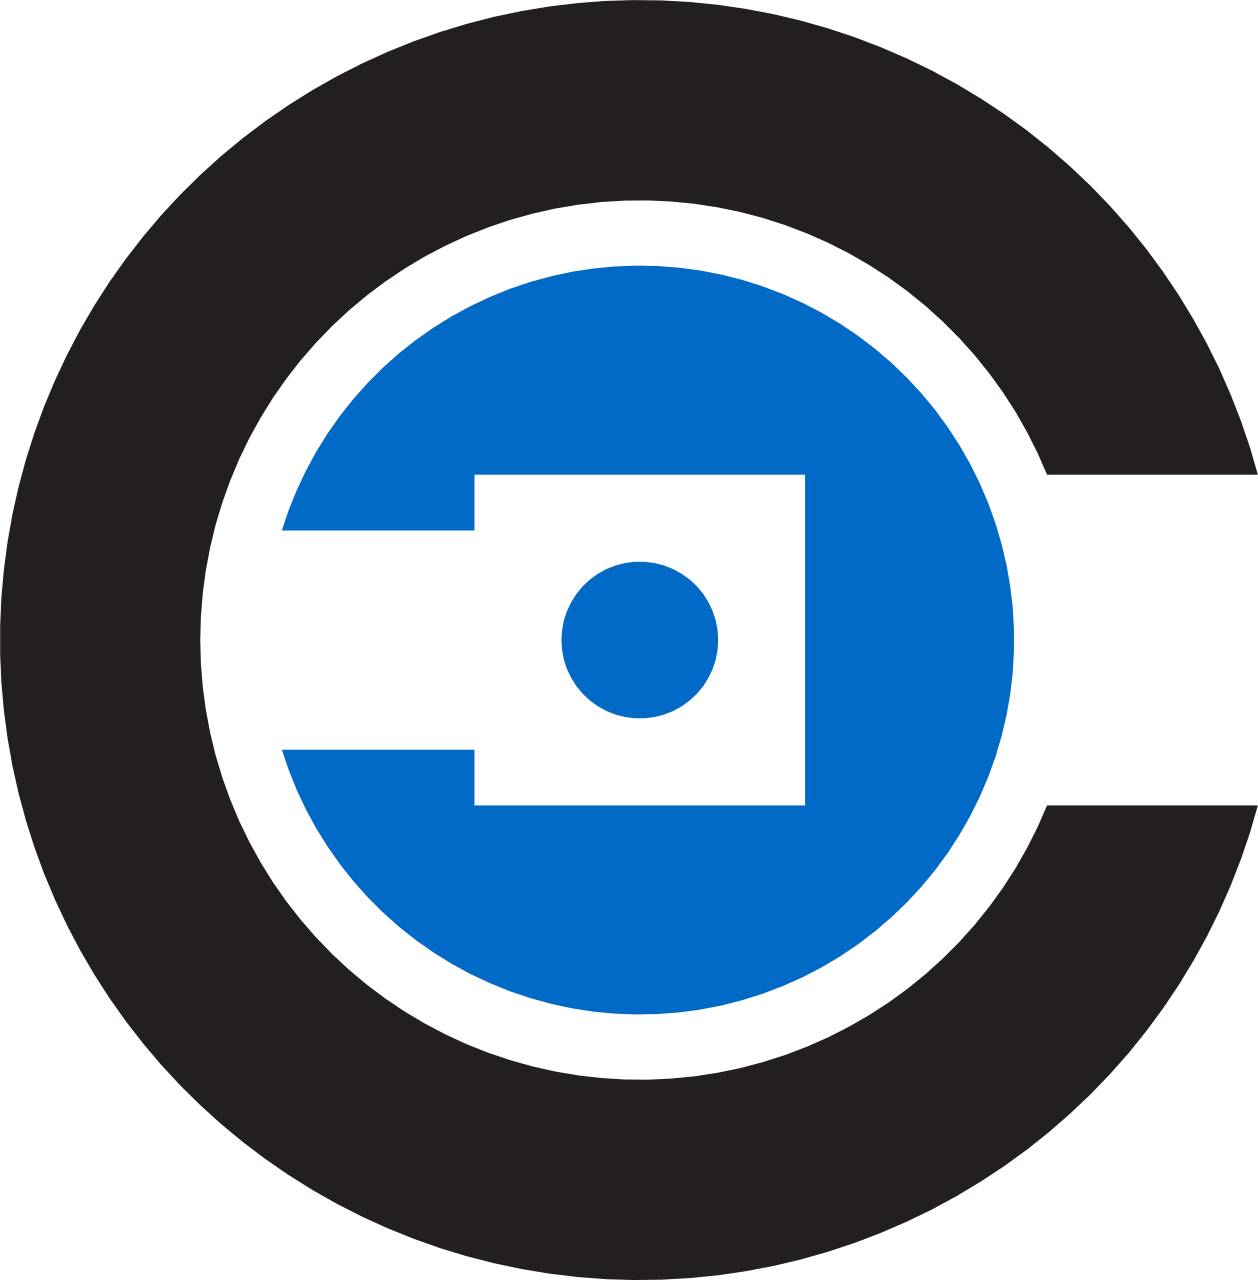 BluCor Construction Group, LLC's Logo